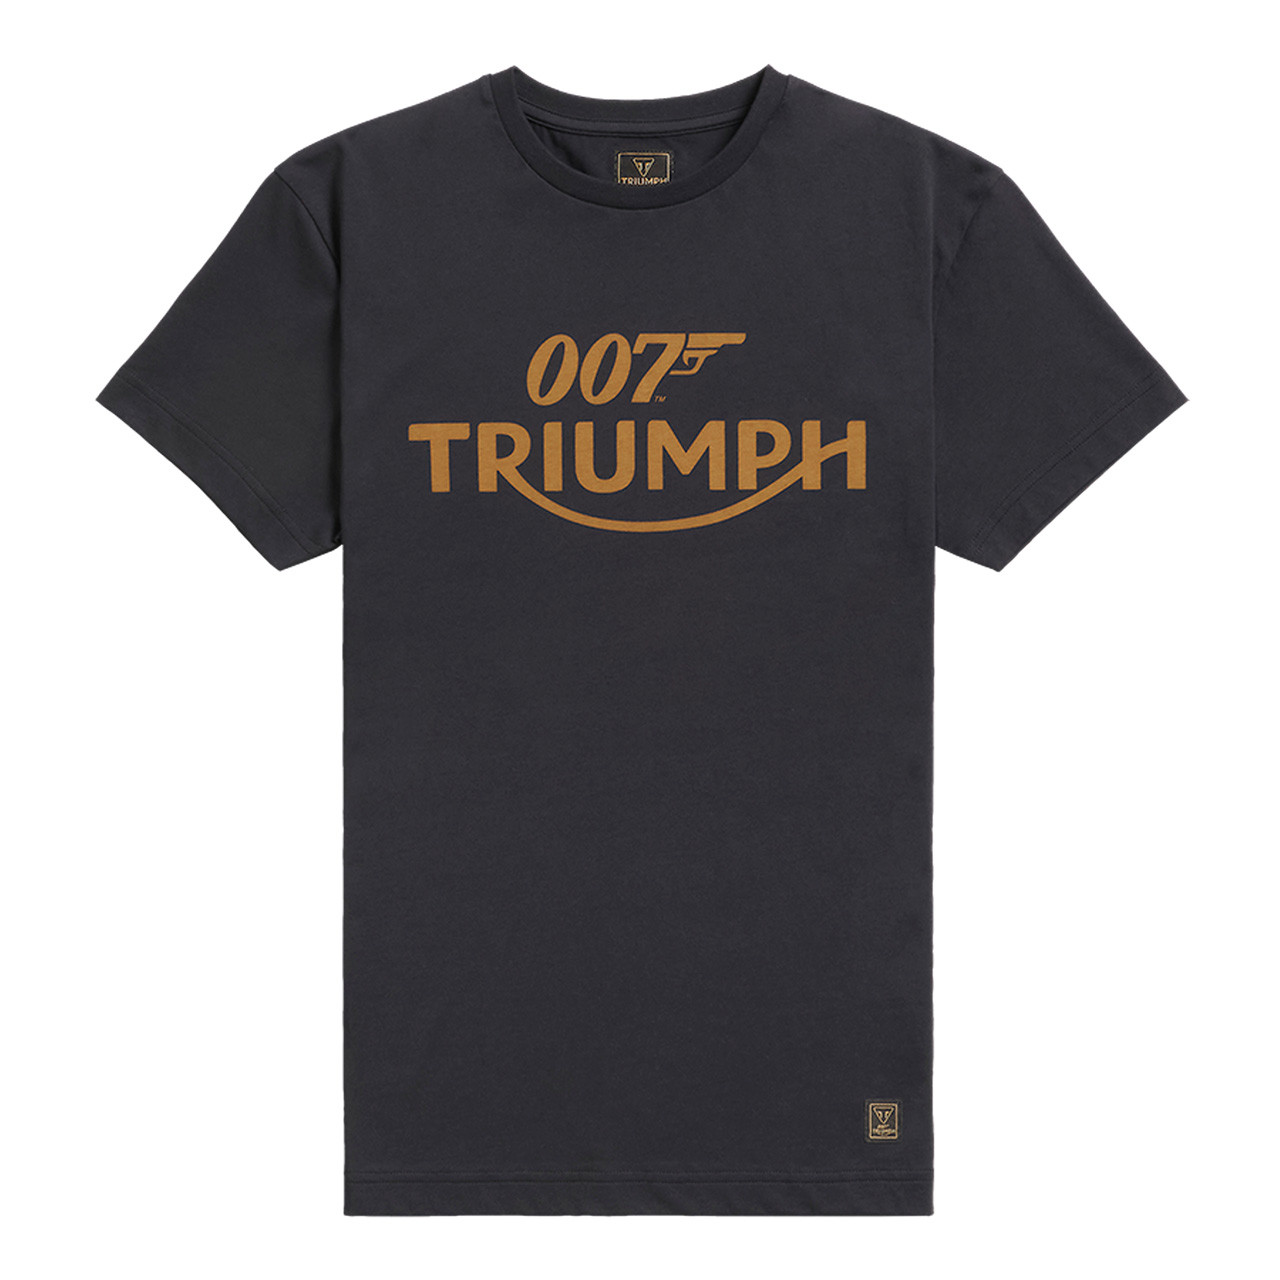 Image of TRIUMPH X 007 BOND EDITION T-SHIRT